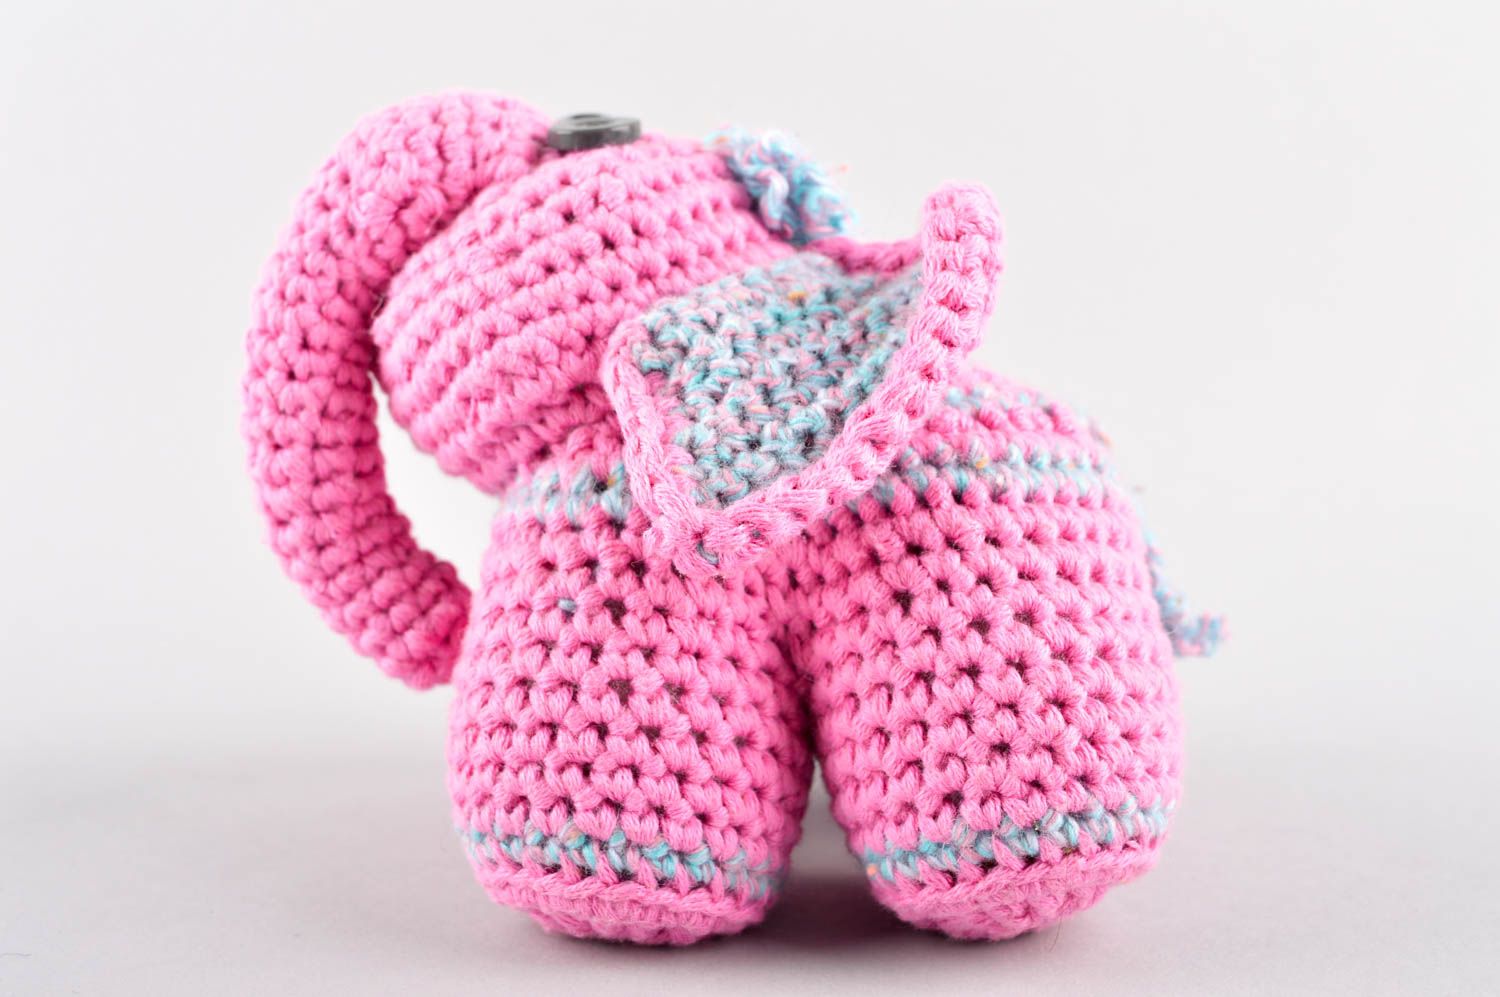 Handmade toy stuffed toy crocheted toy for babies soft nursery decor photo 3